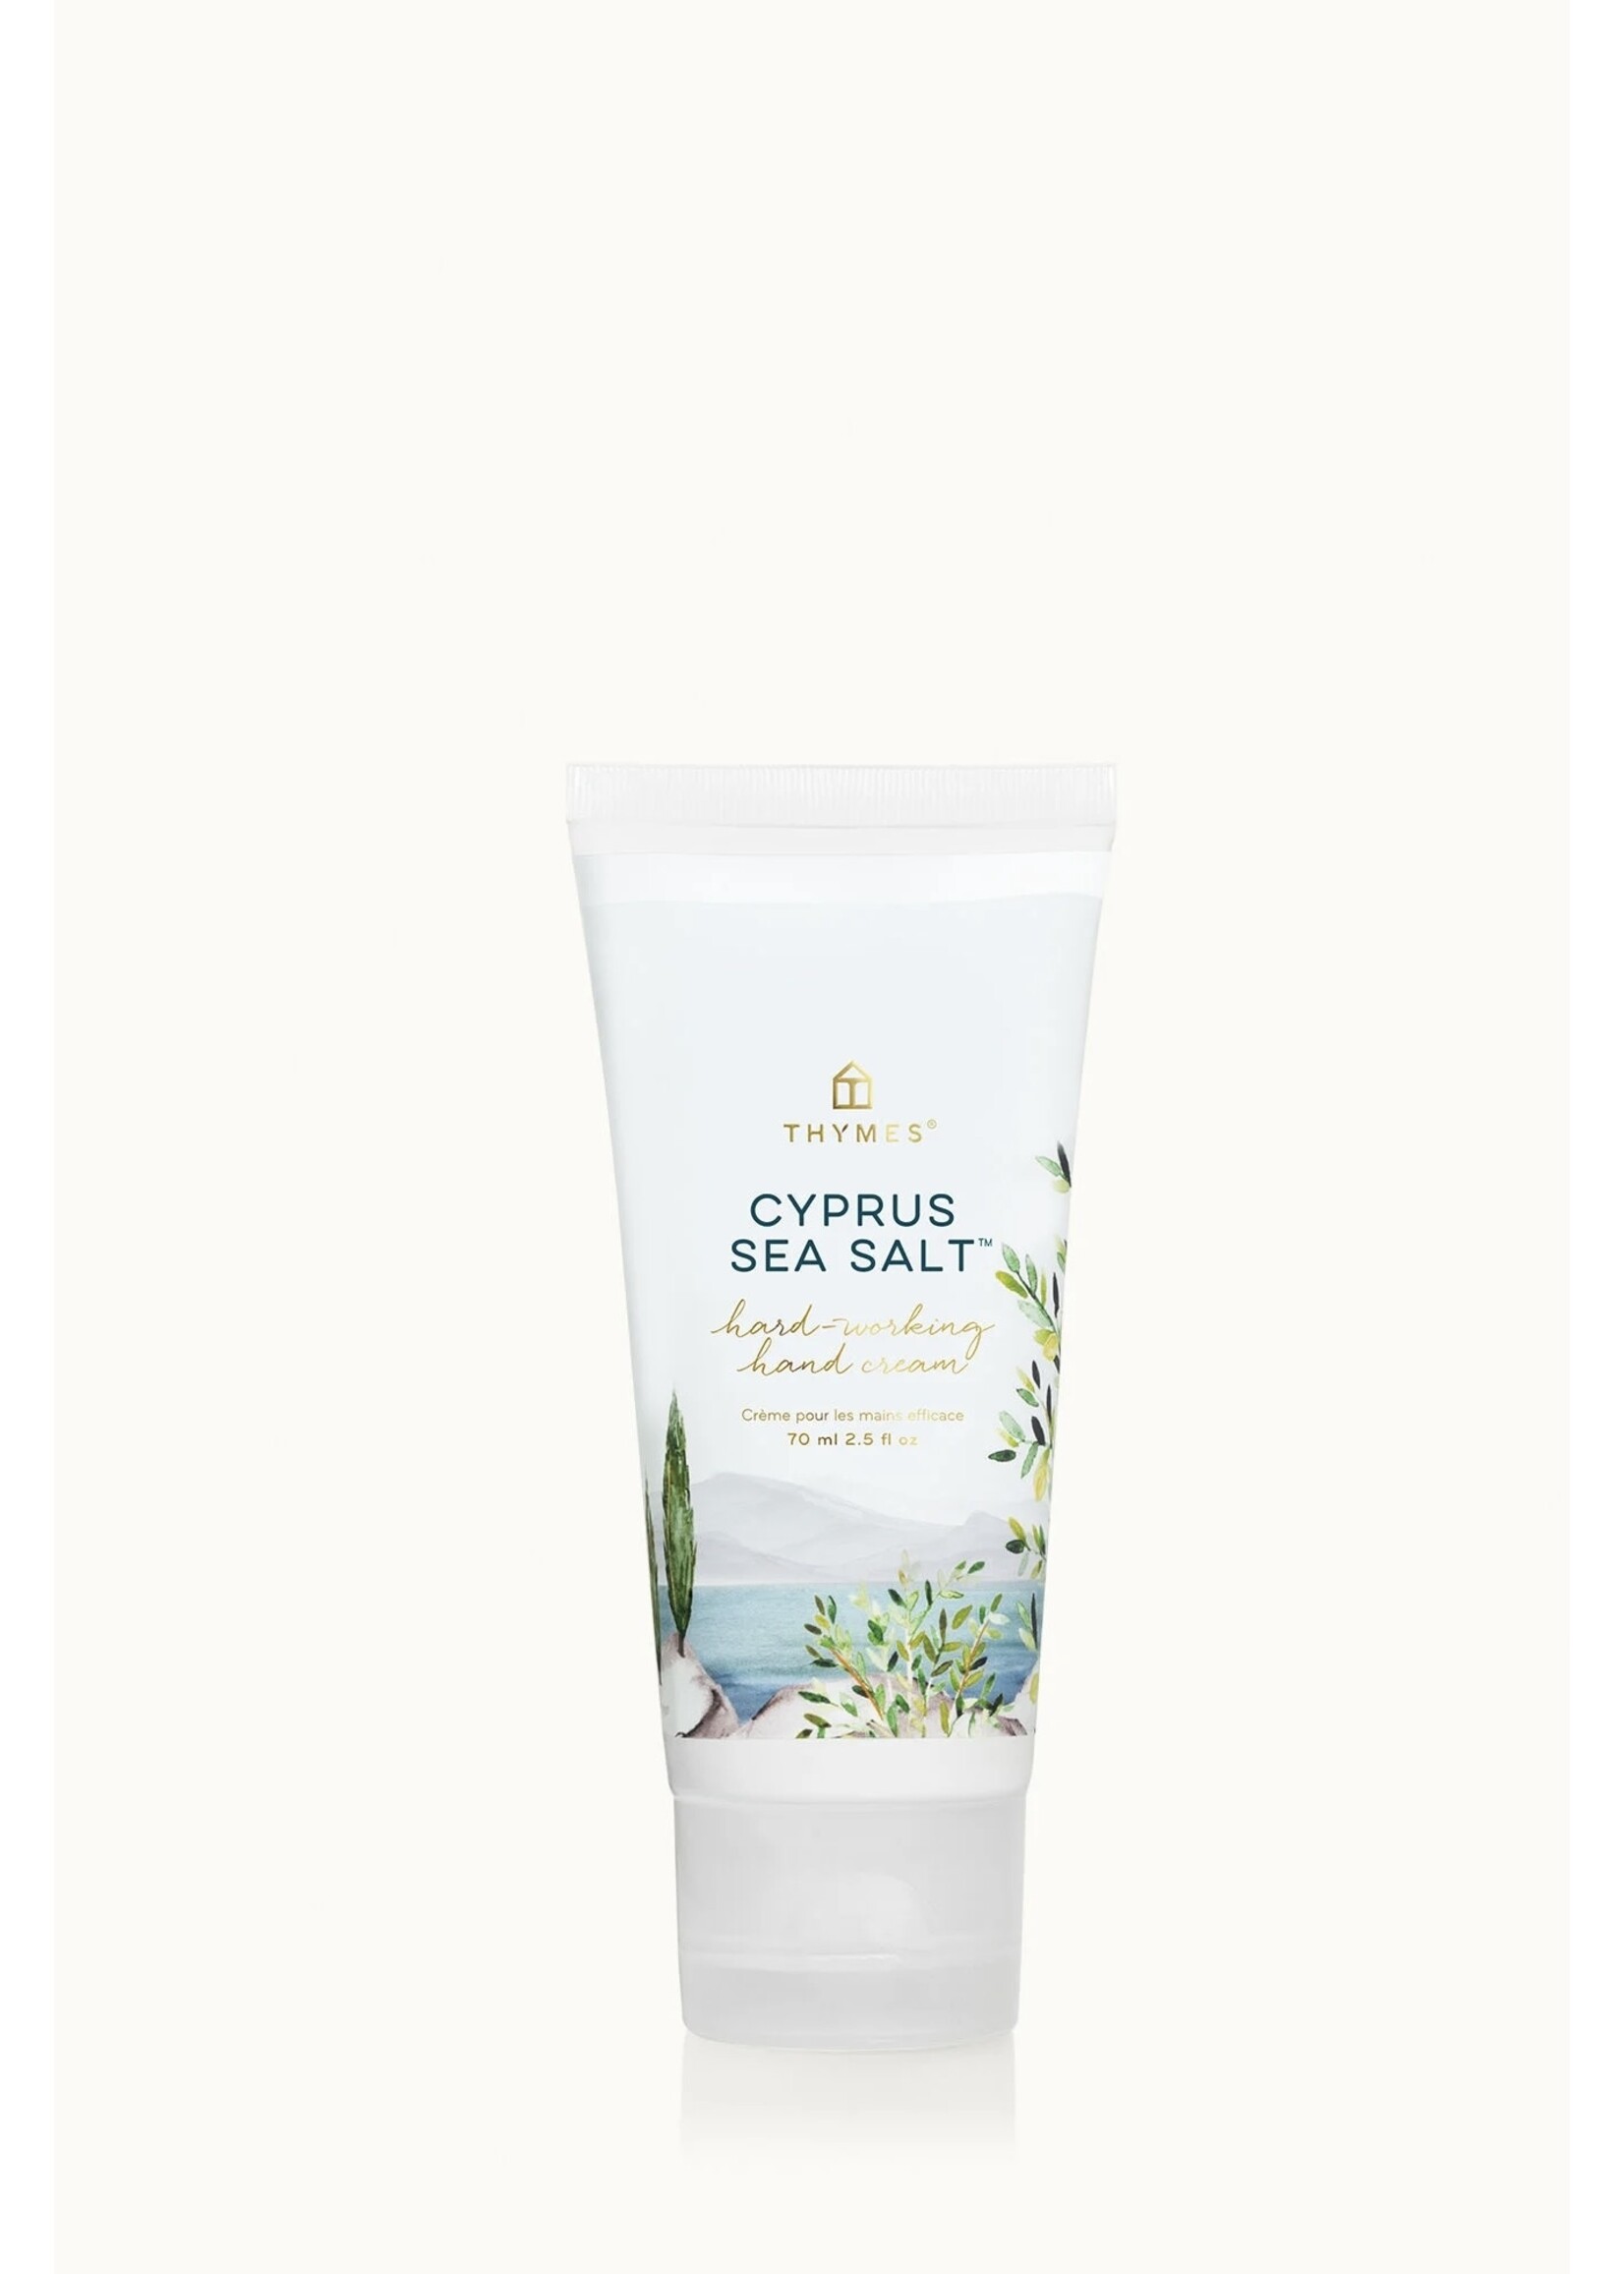 Thymes Cyprus Sea Salt Hard-Working Hand Cream